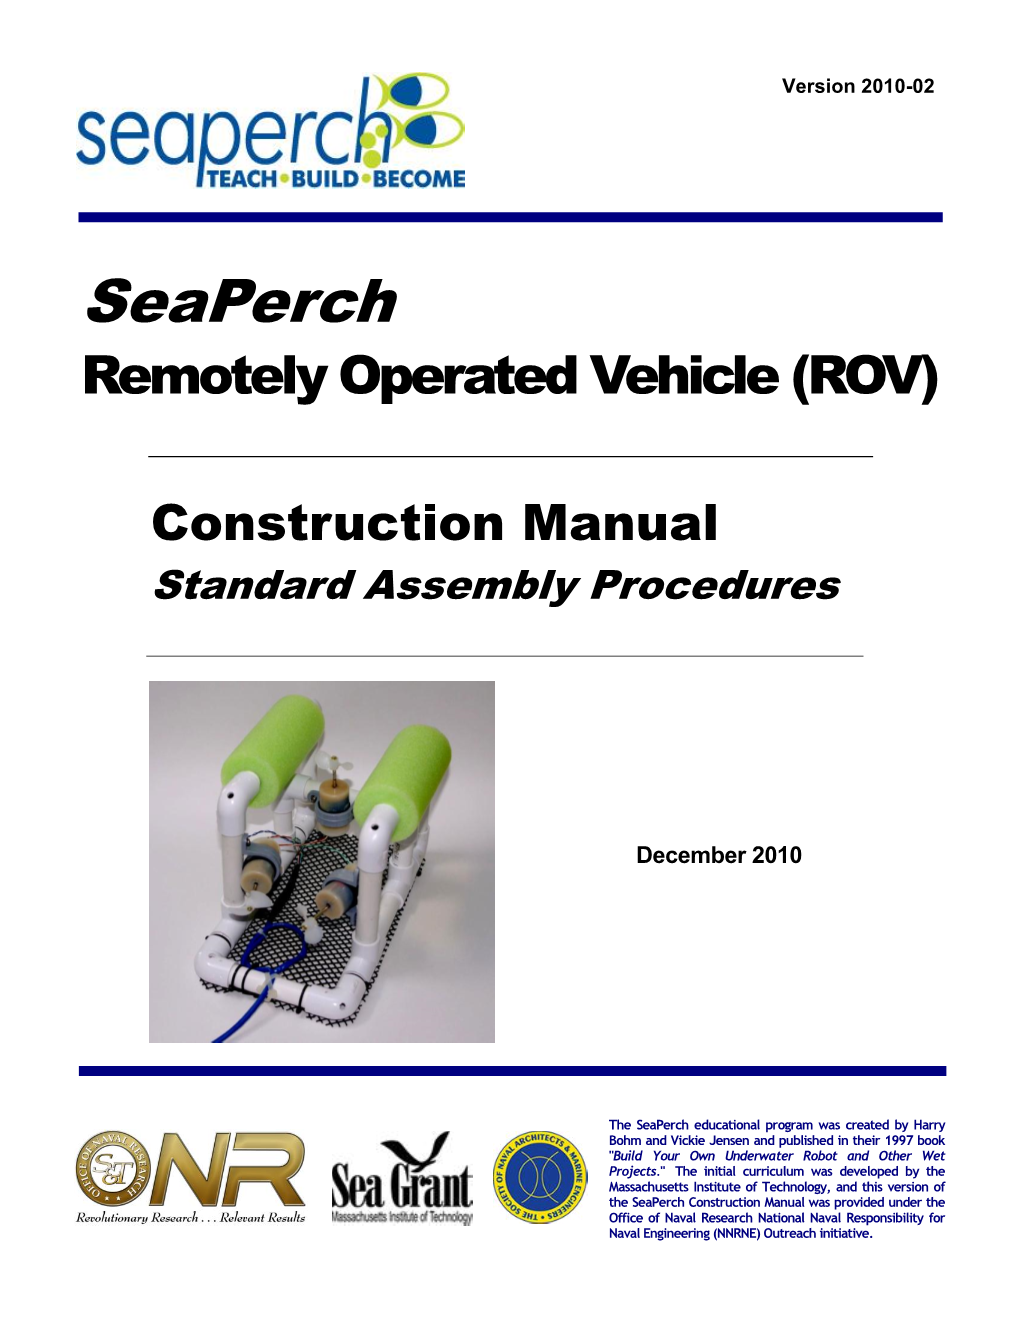 Seaperch ROV Construction Manual – Version 2010-02